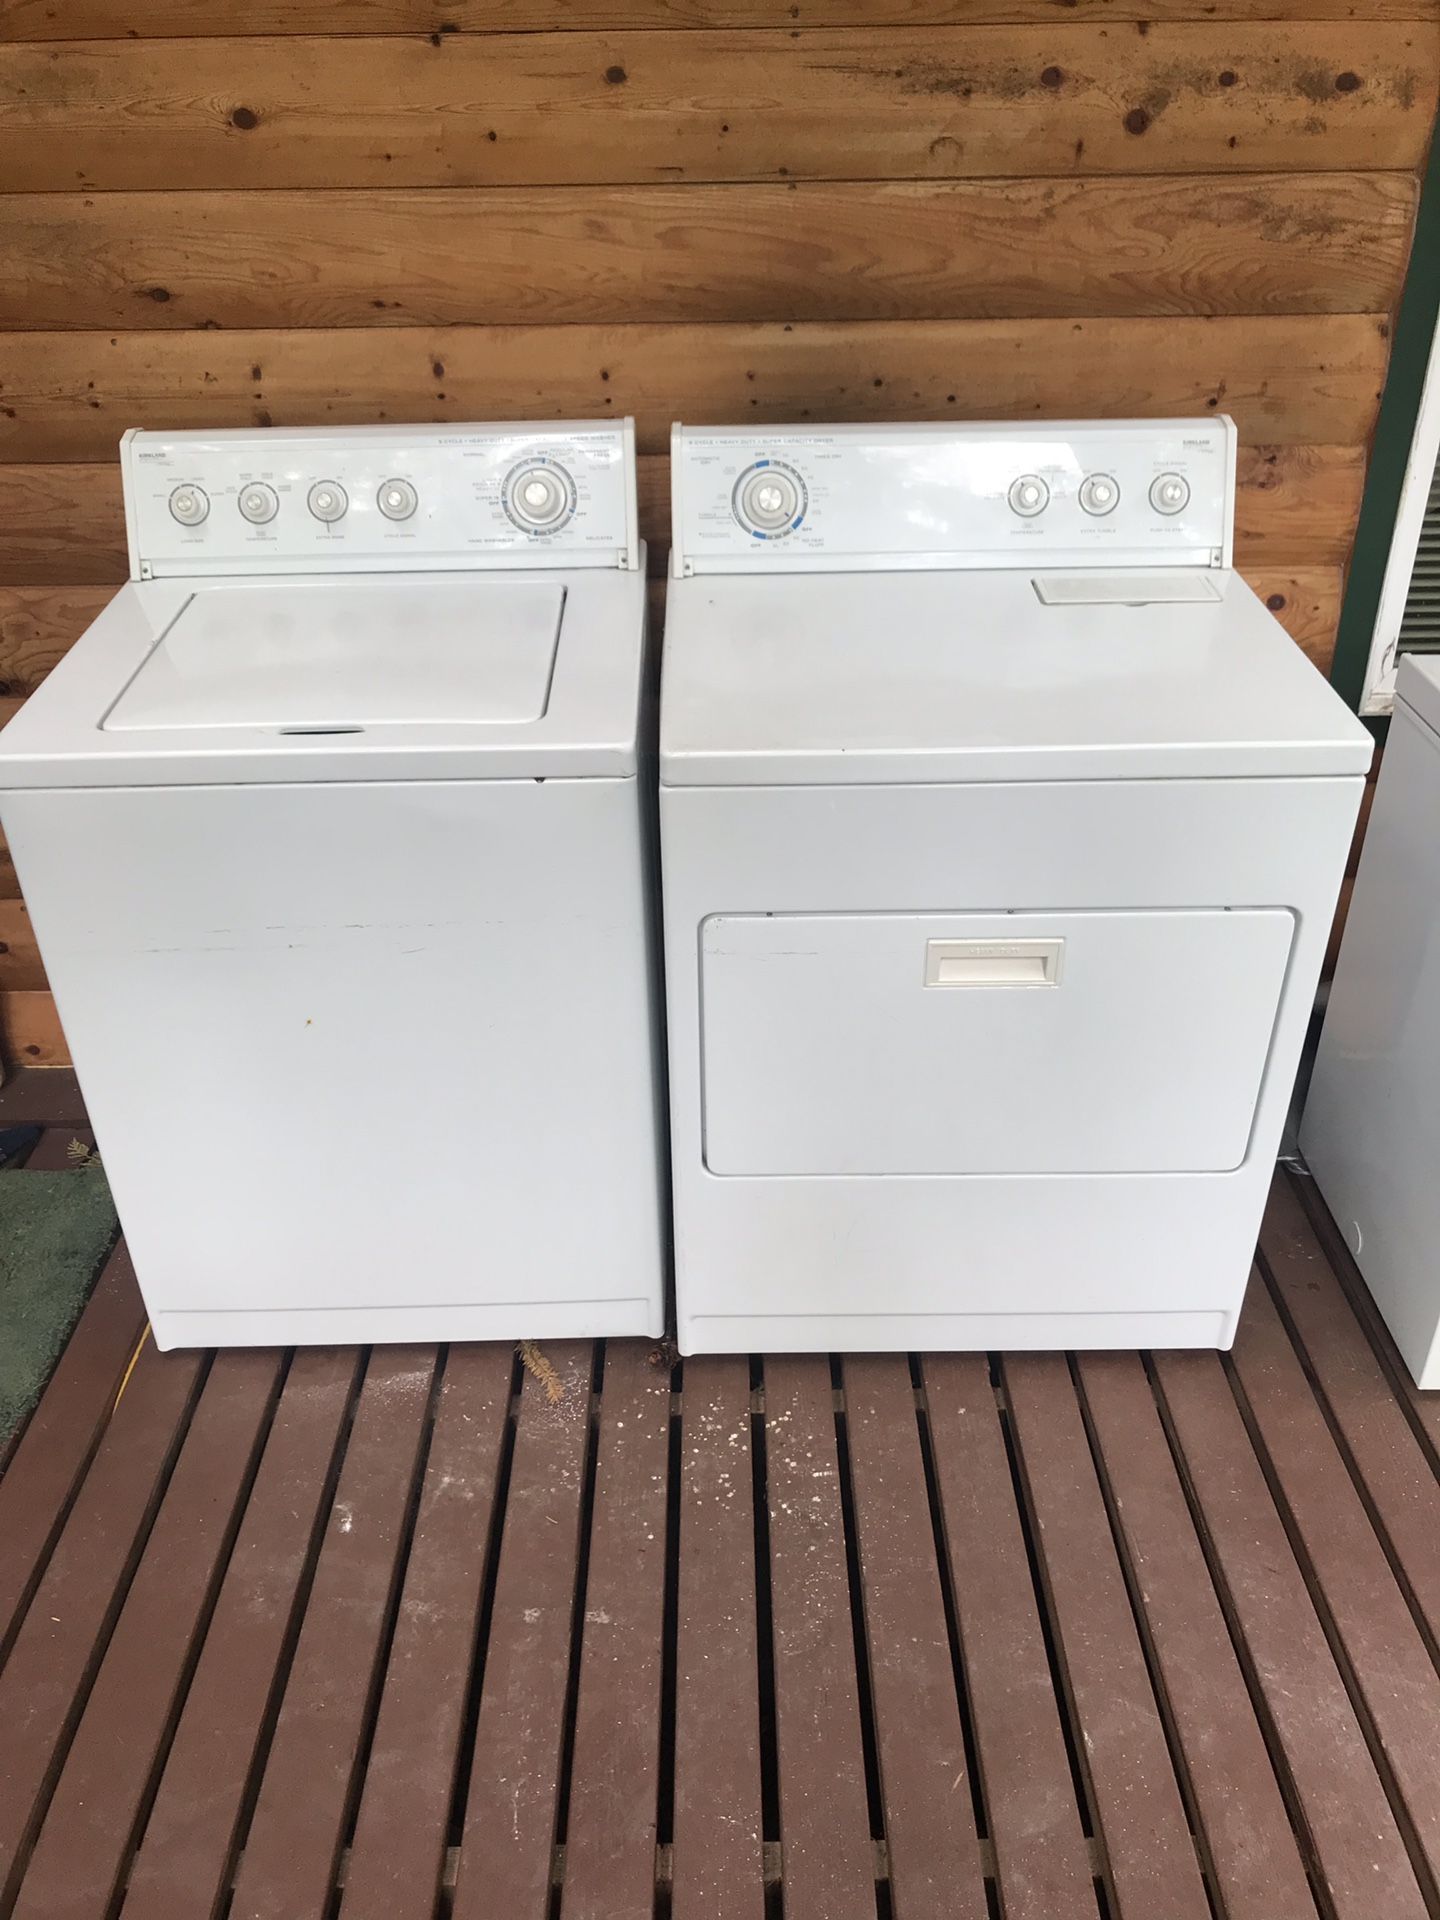 Kirkland Signature Washer and Dryer set